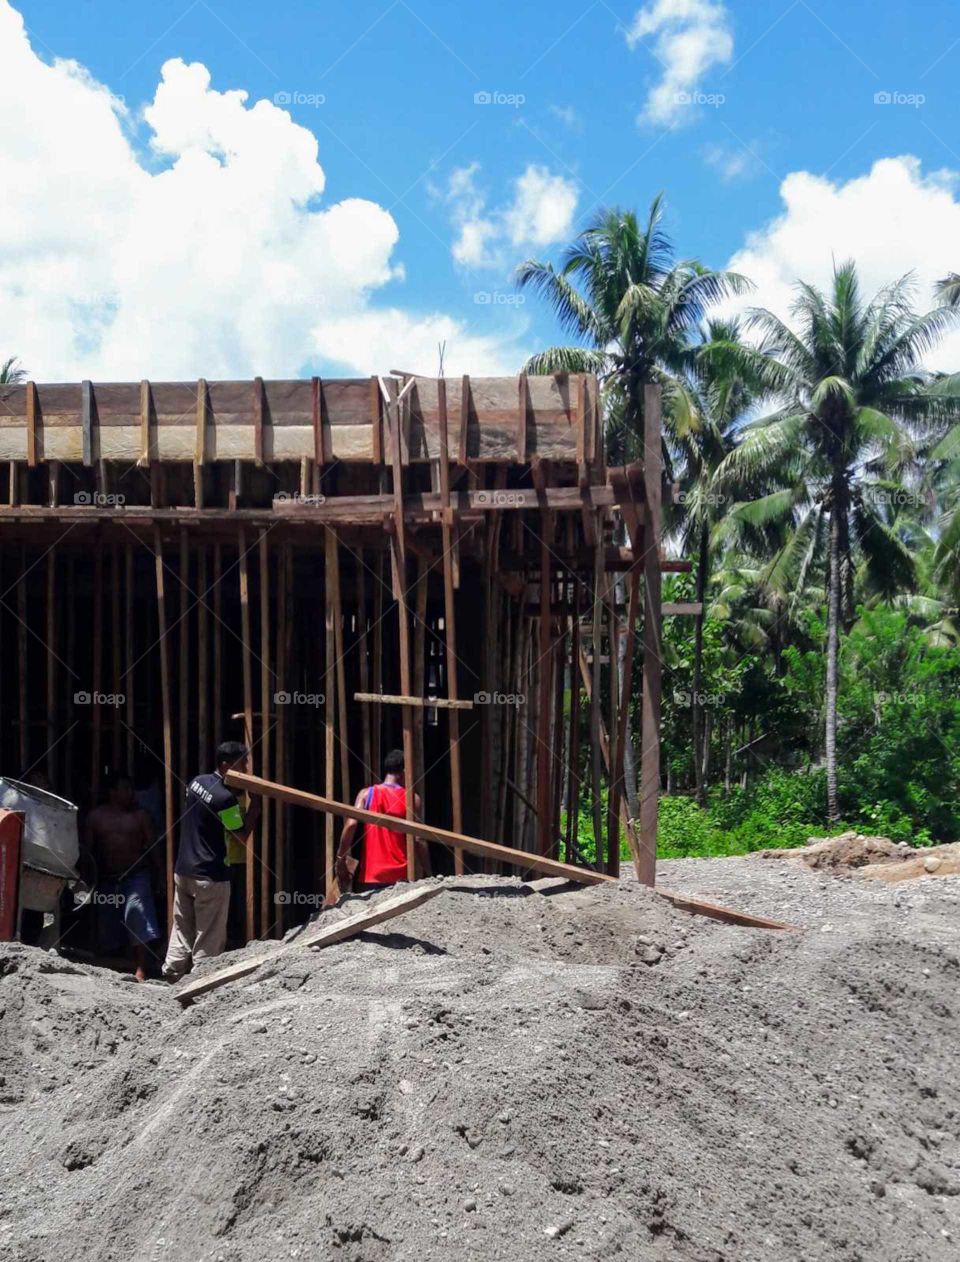 "Construction"....
#Ternate City...
#North Maluku...